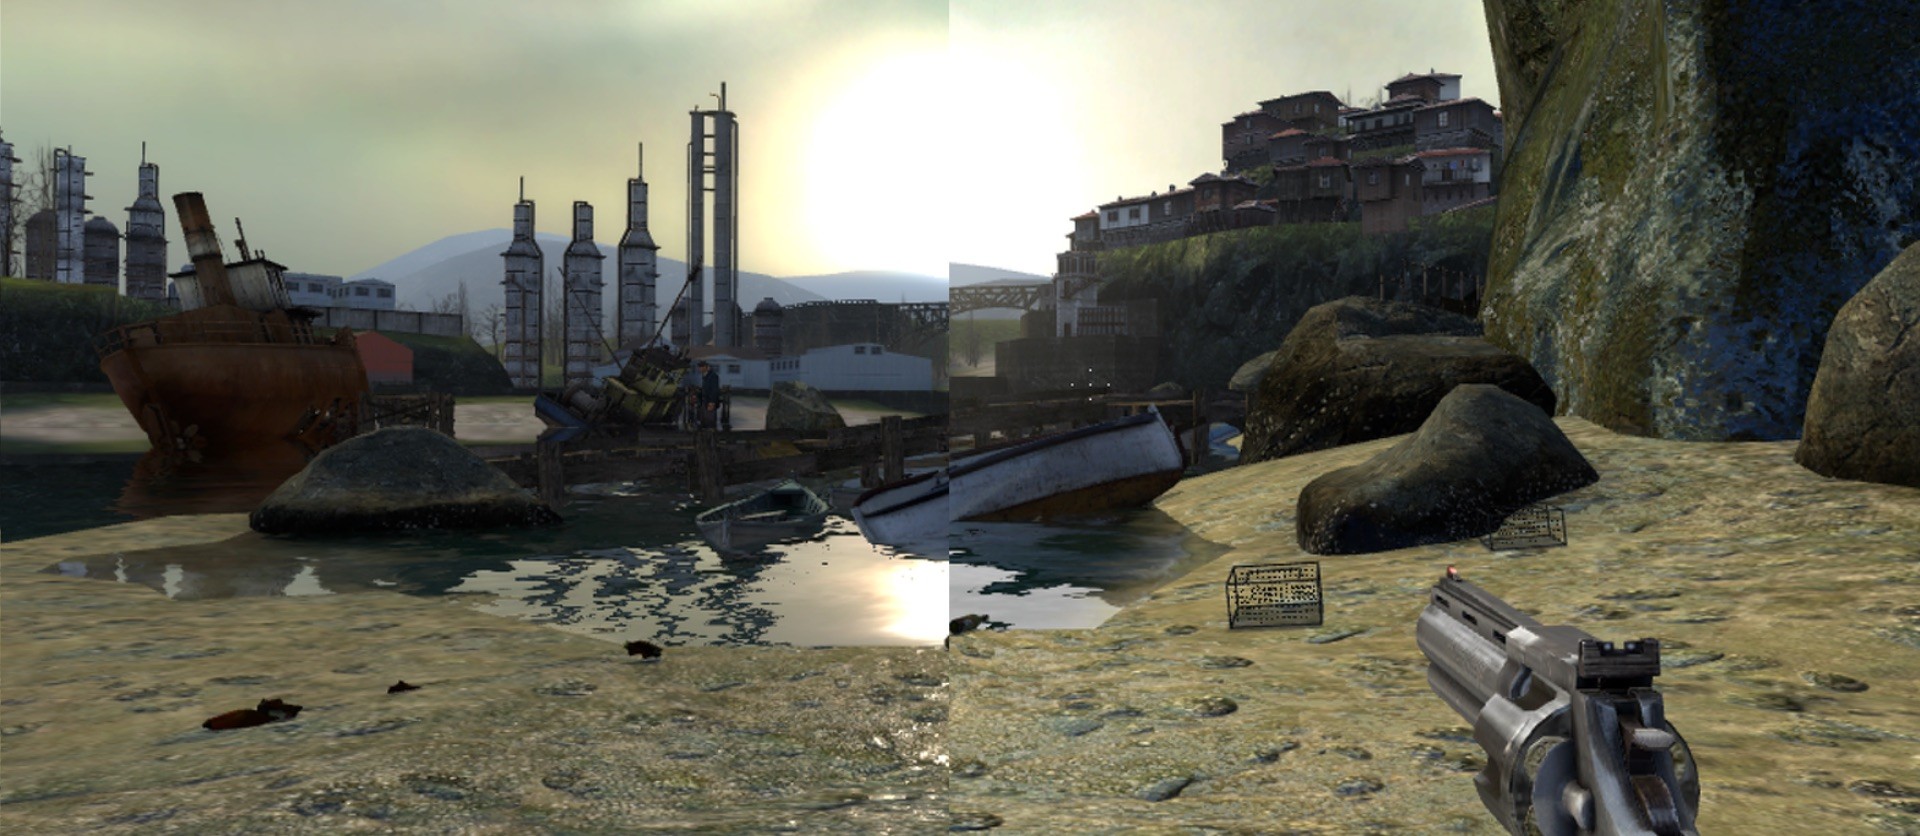 HDR Rendering - Half-Life: Lost Coast 2005